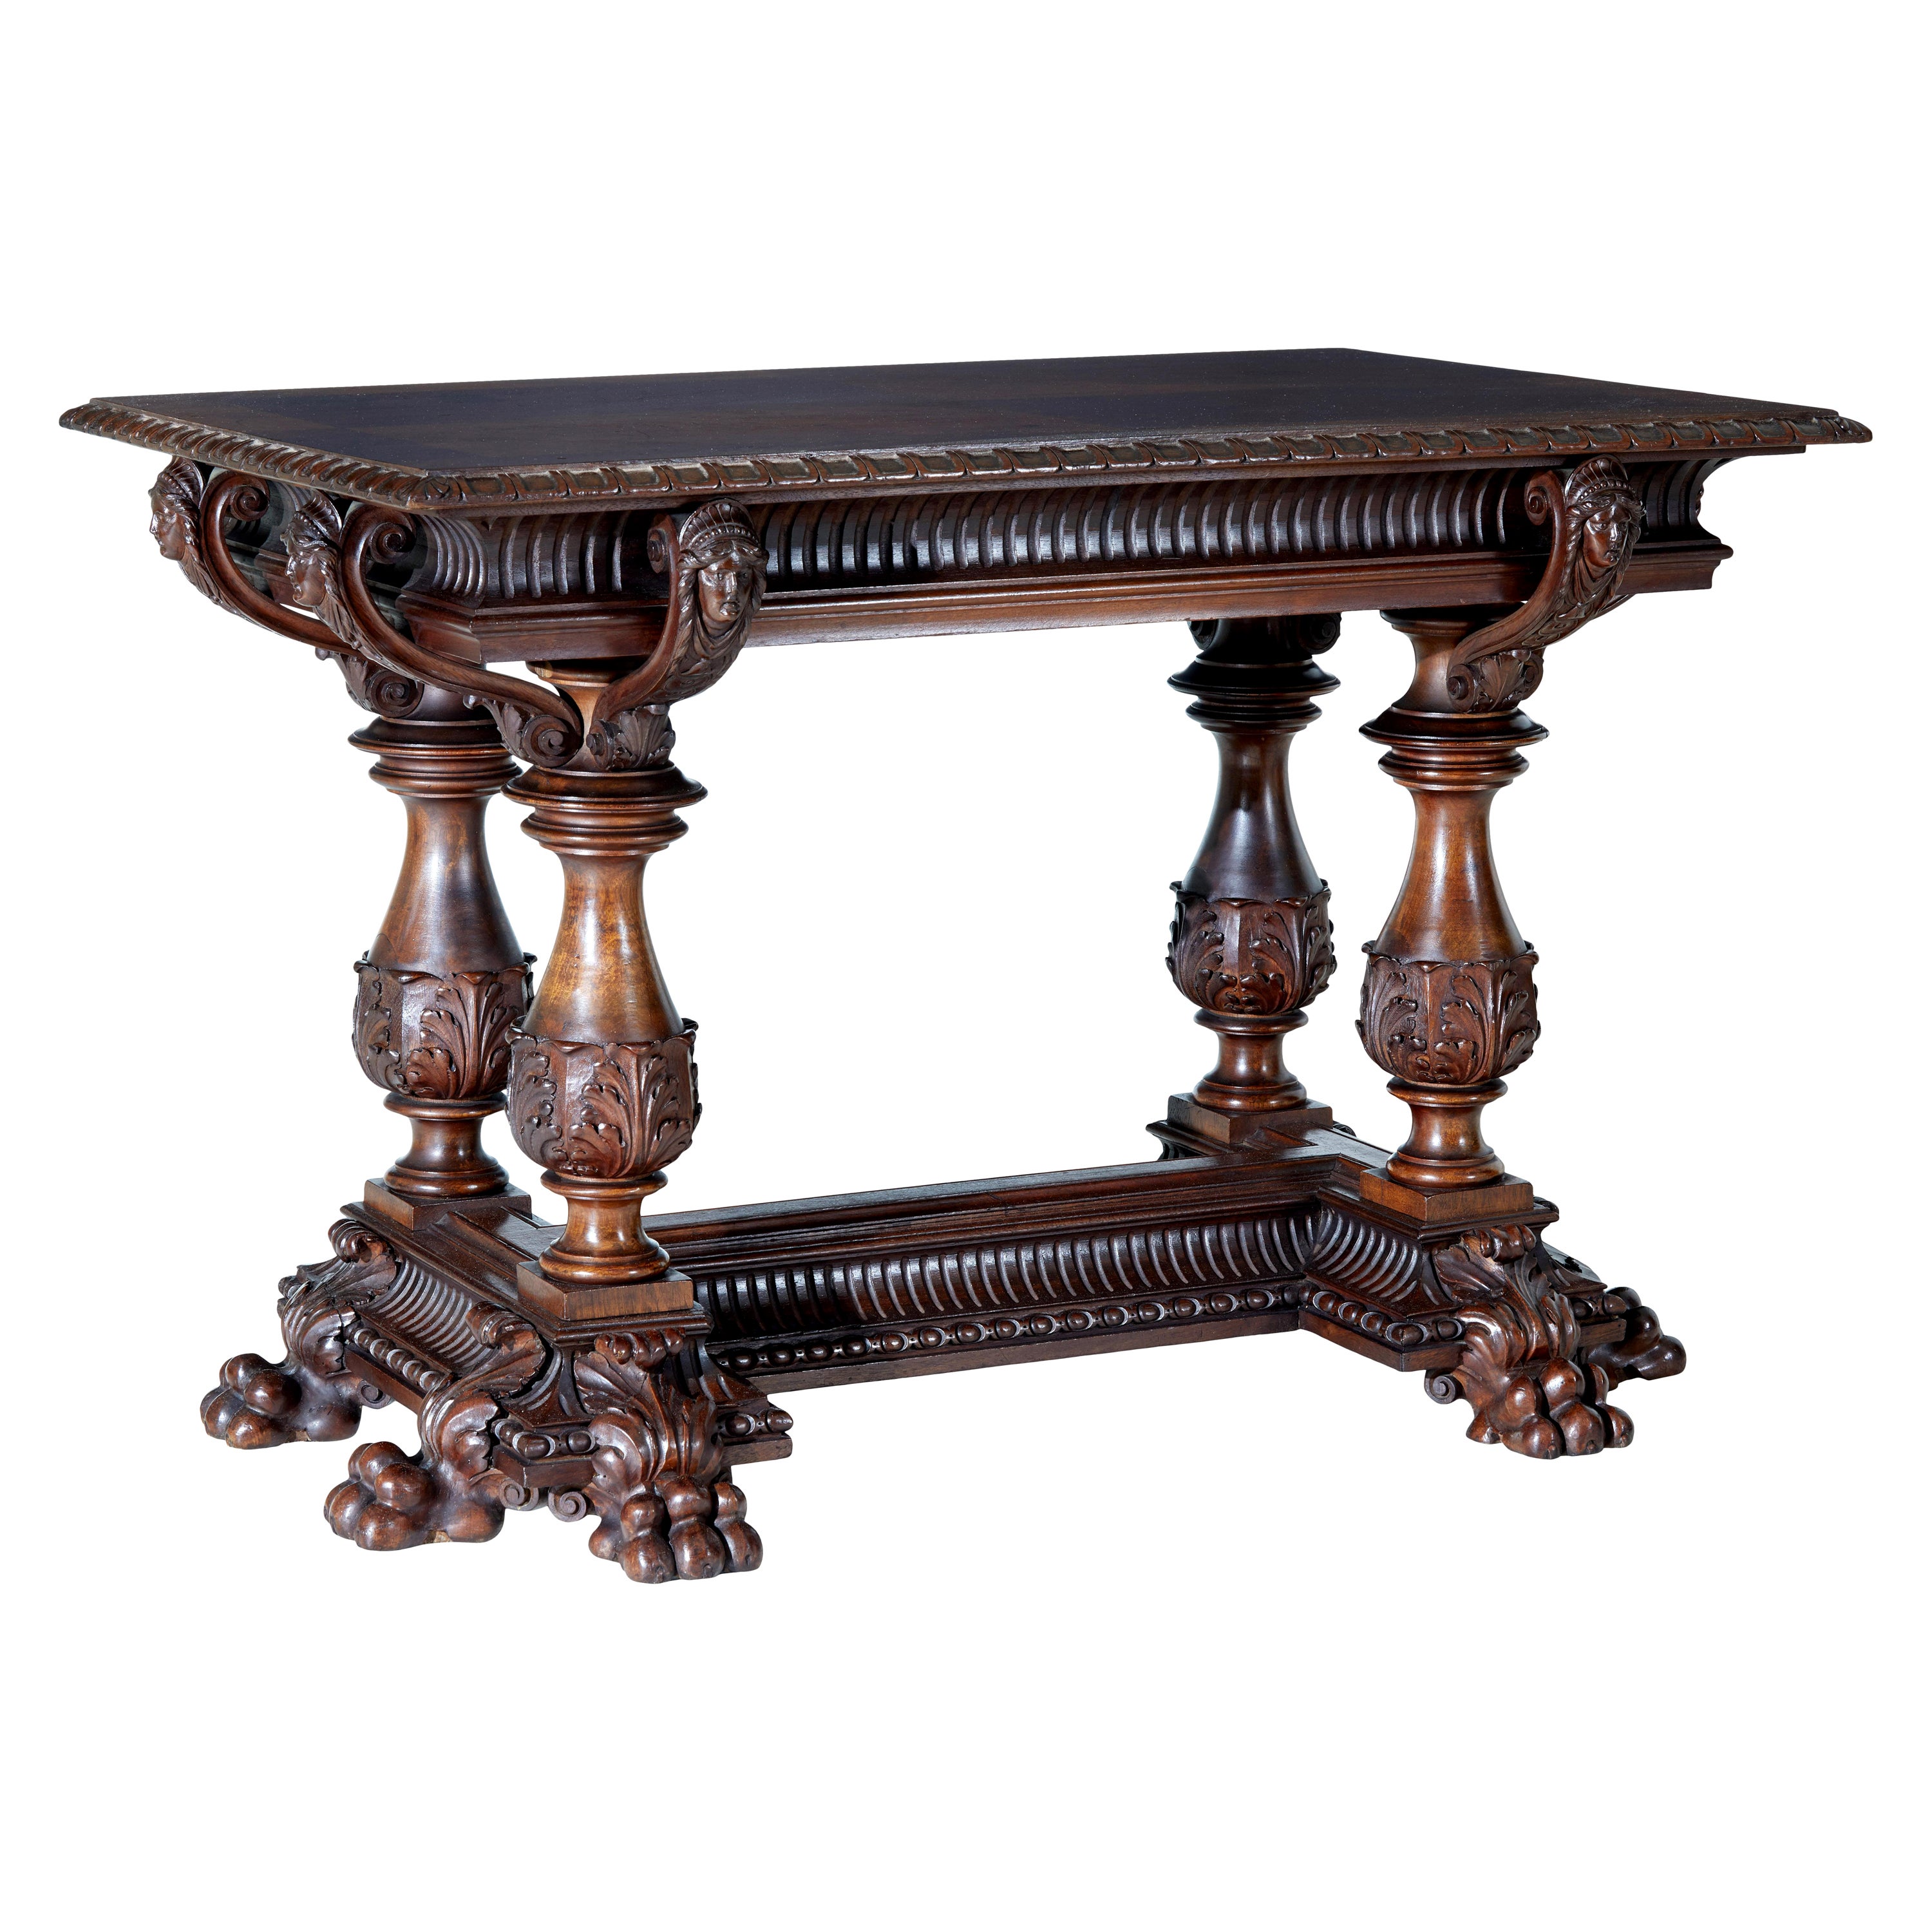 19th century Italian carved walnut center table